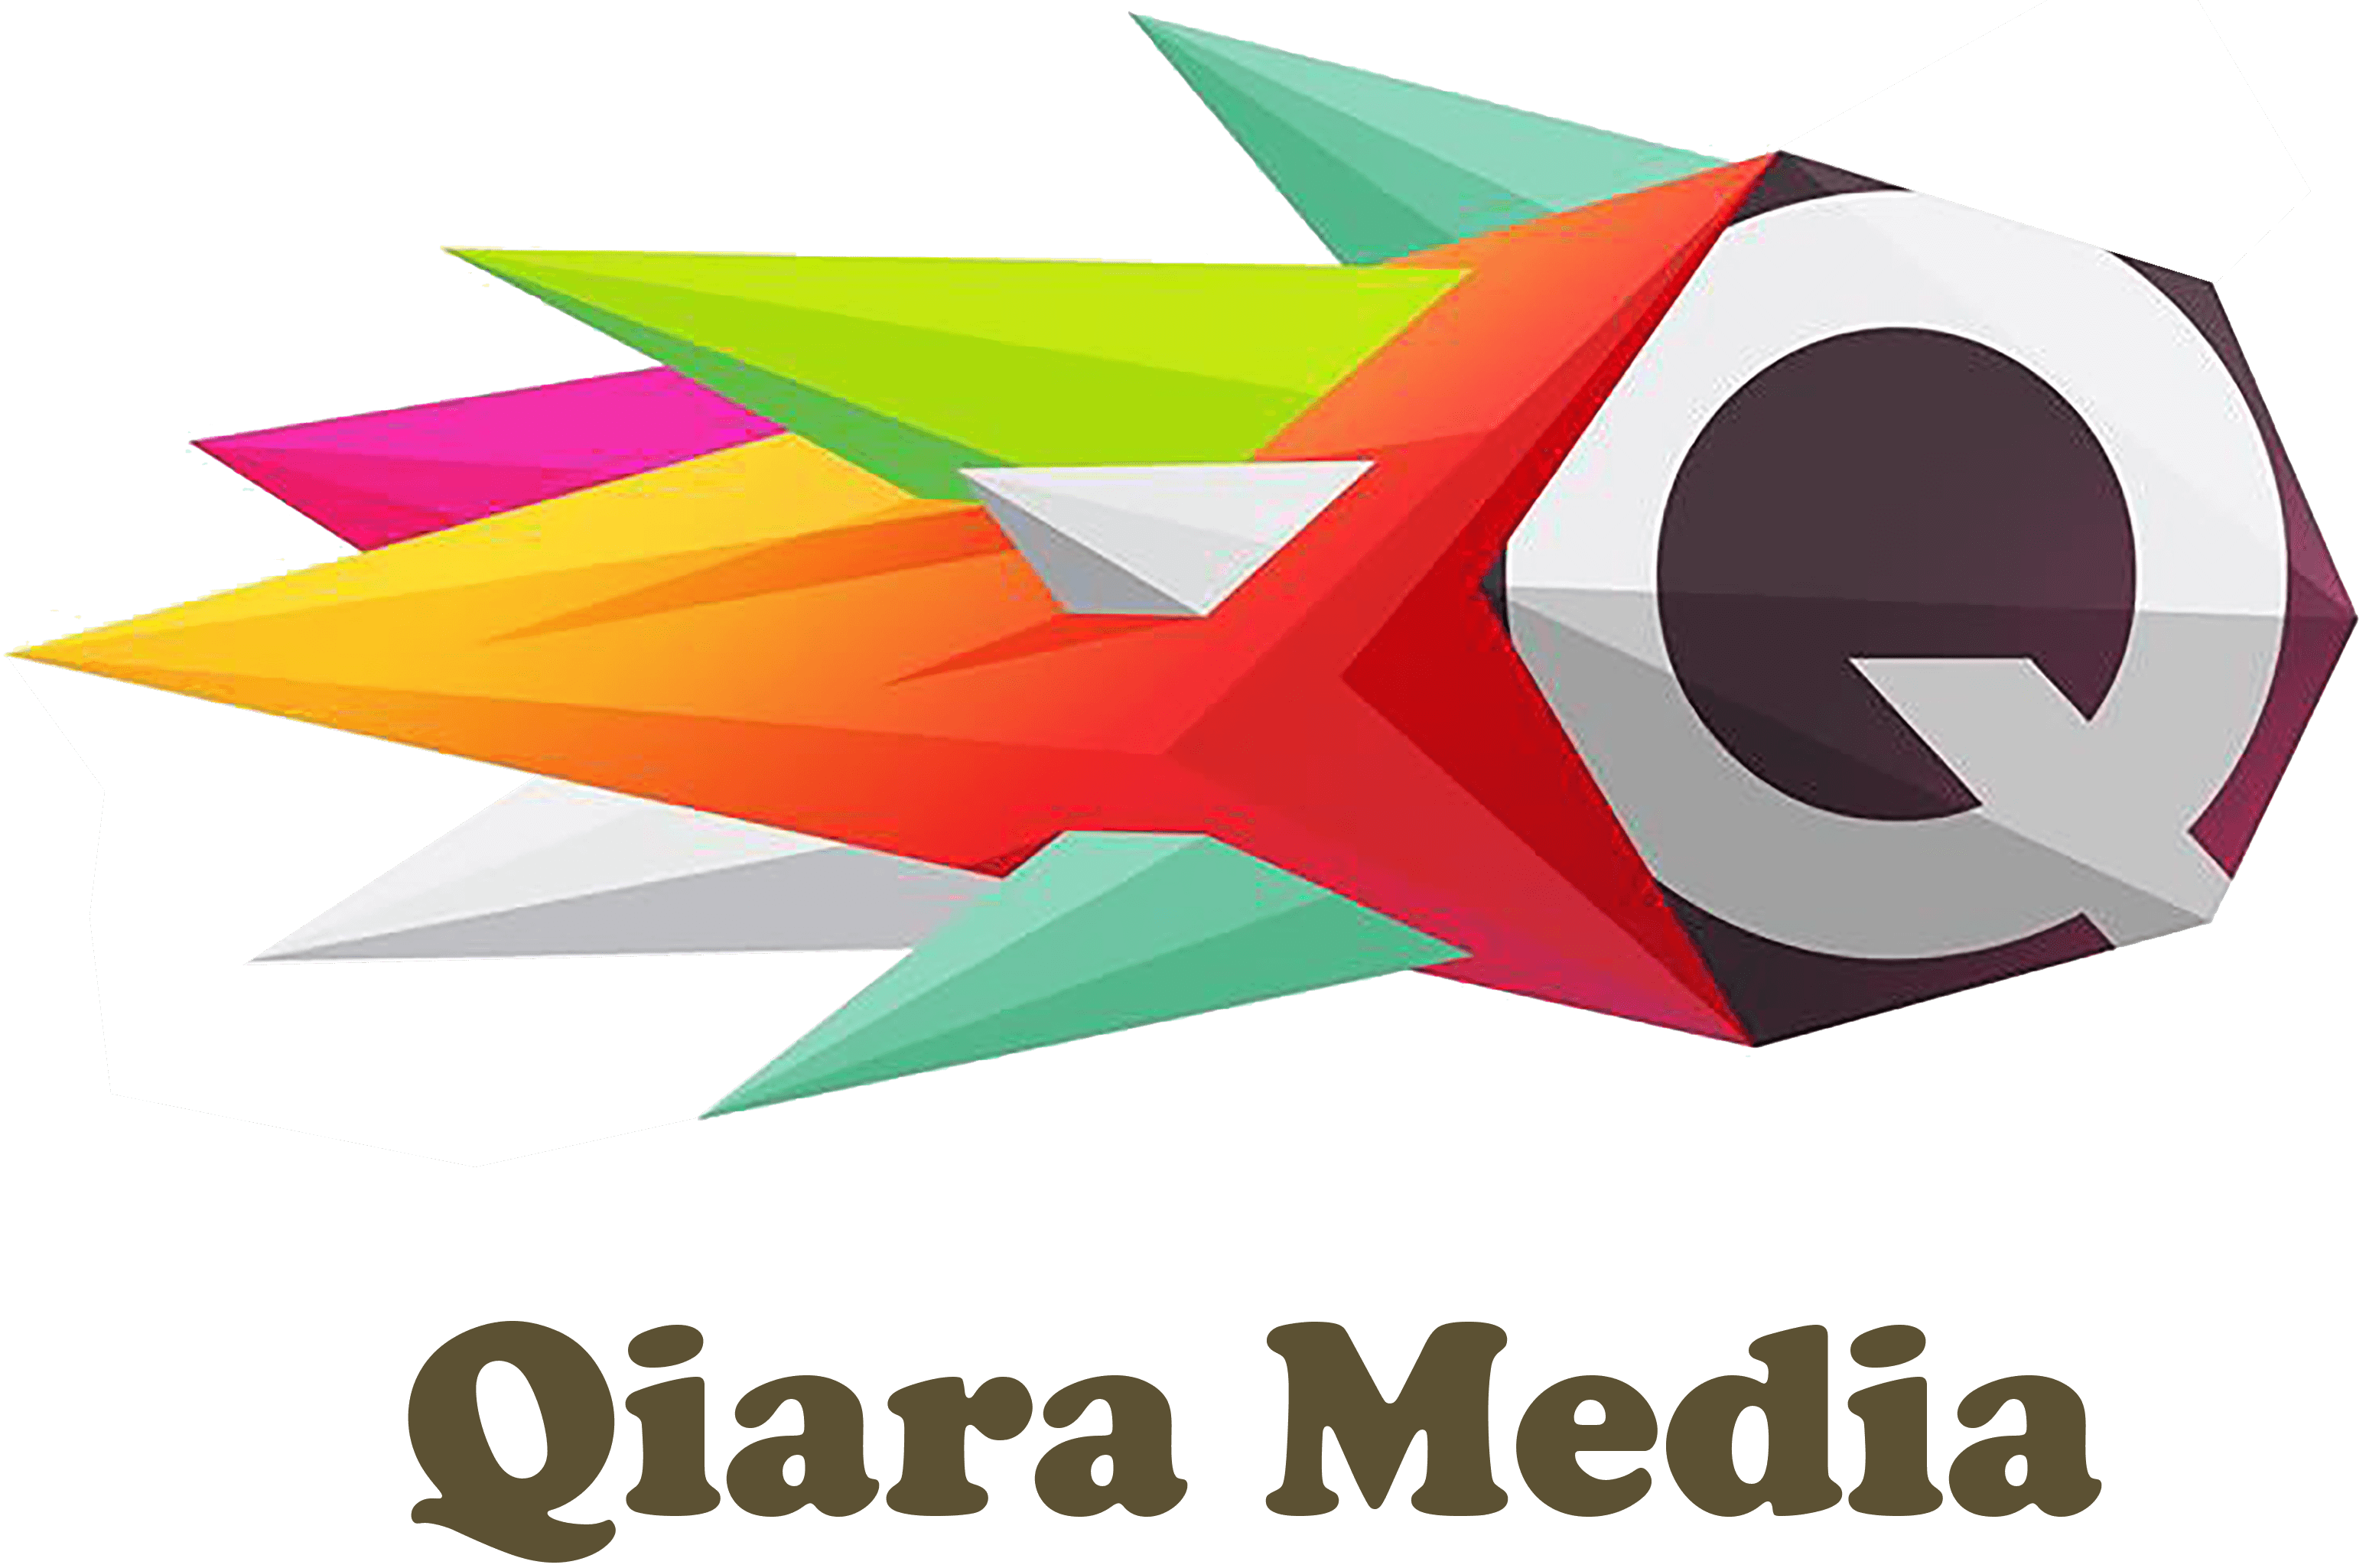 Qiara Media